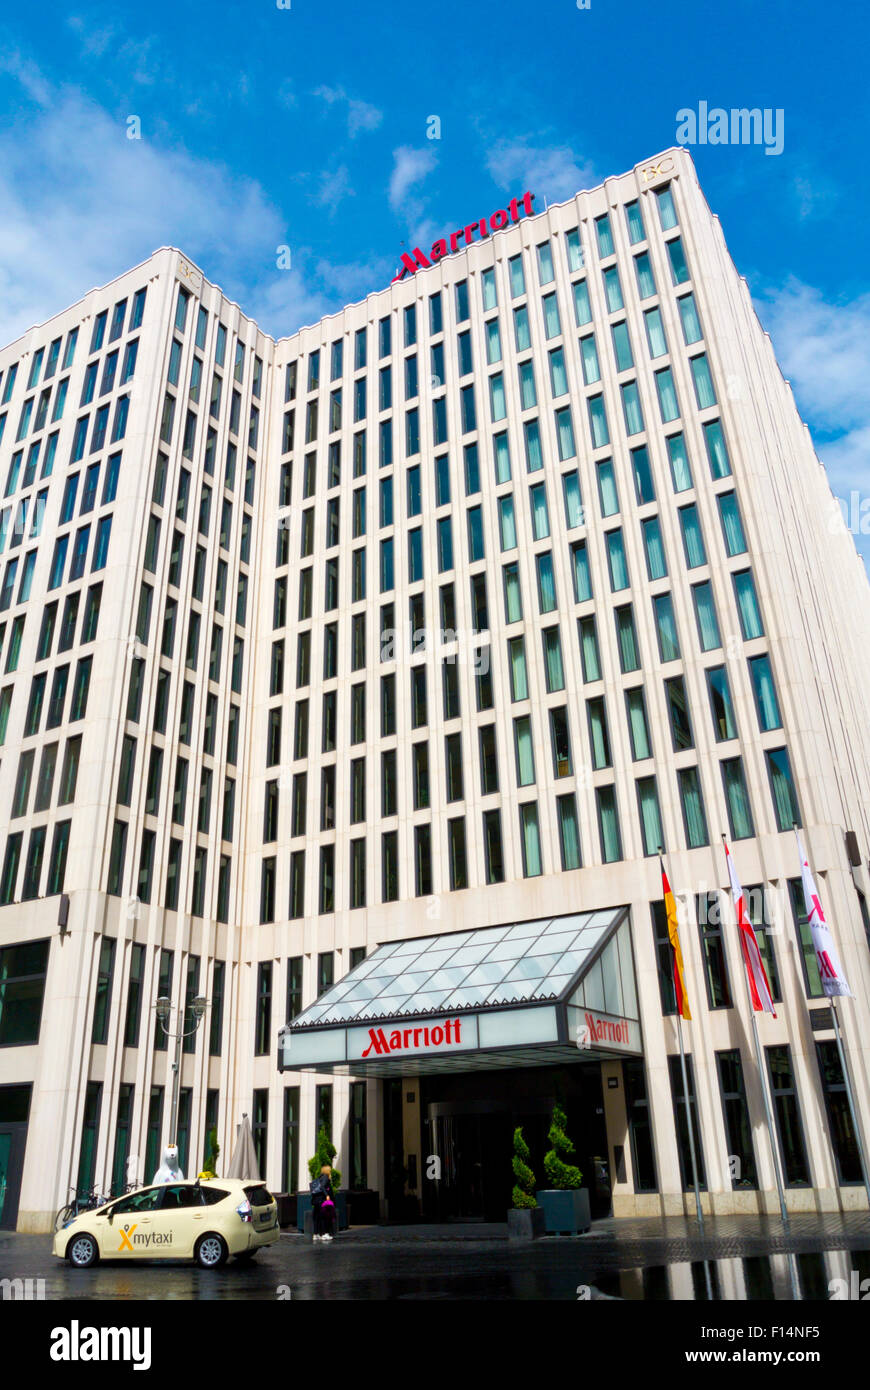 Marriott Hotel, Potsdamer Platz, Berlin, Germany Stock Photo